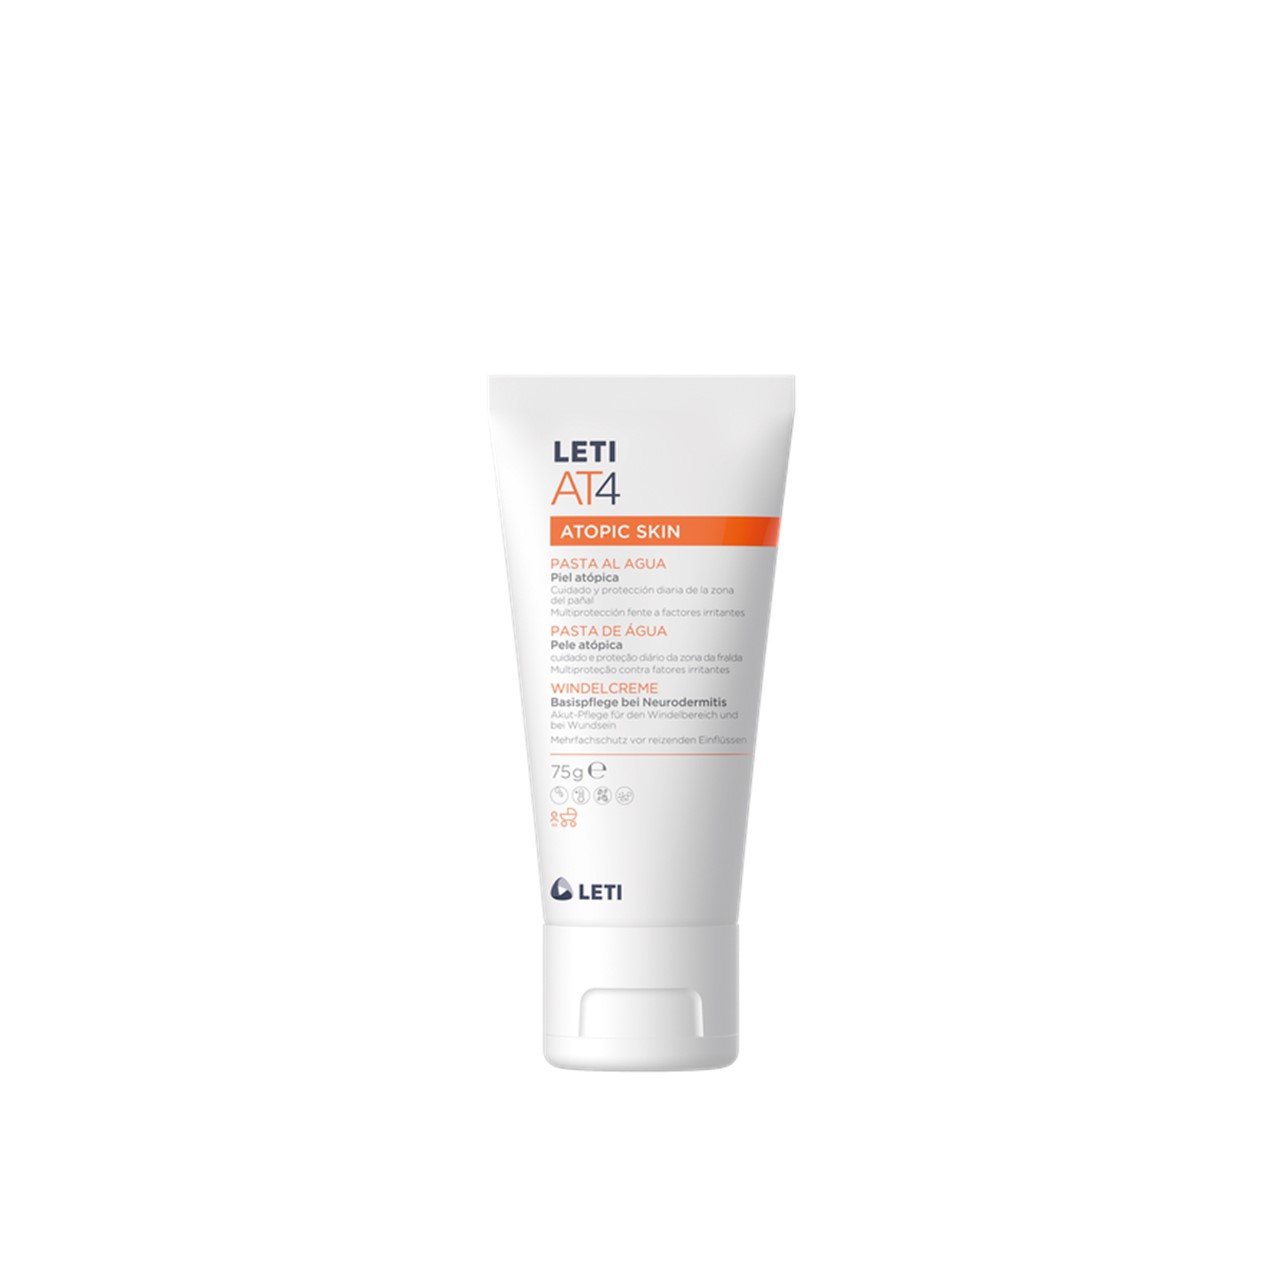 LETI AT4 Atopic Skin Nappy Cream 75g (2.65oz)